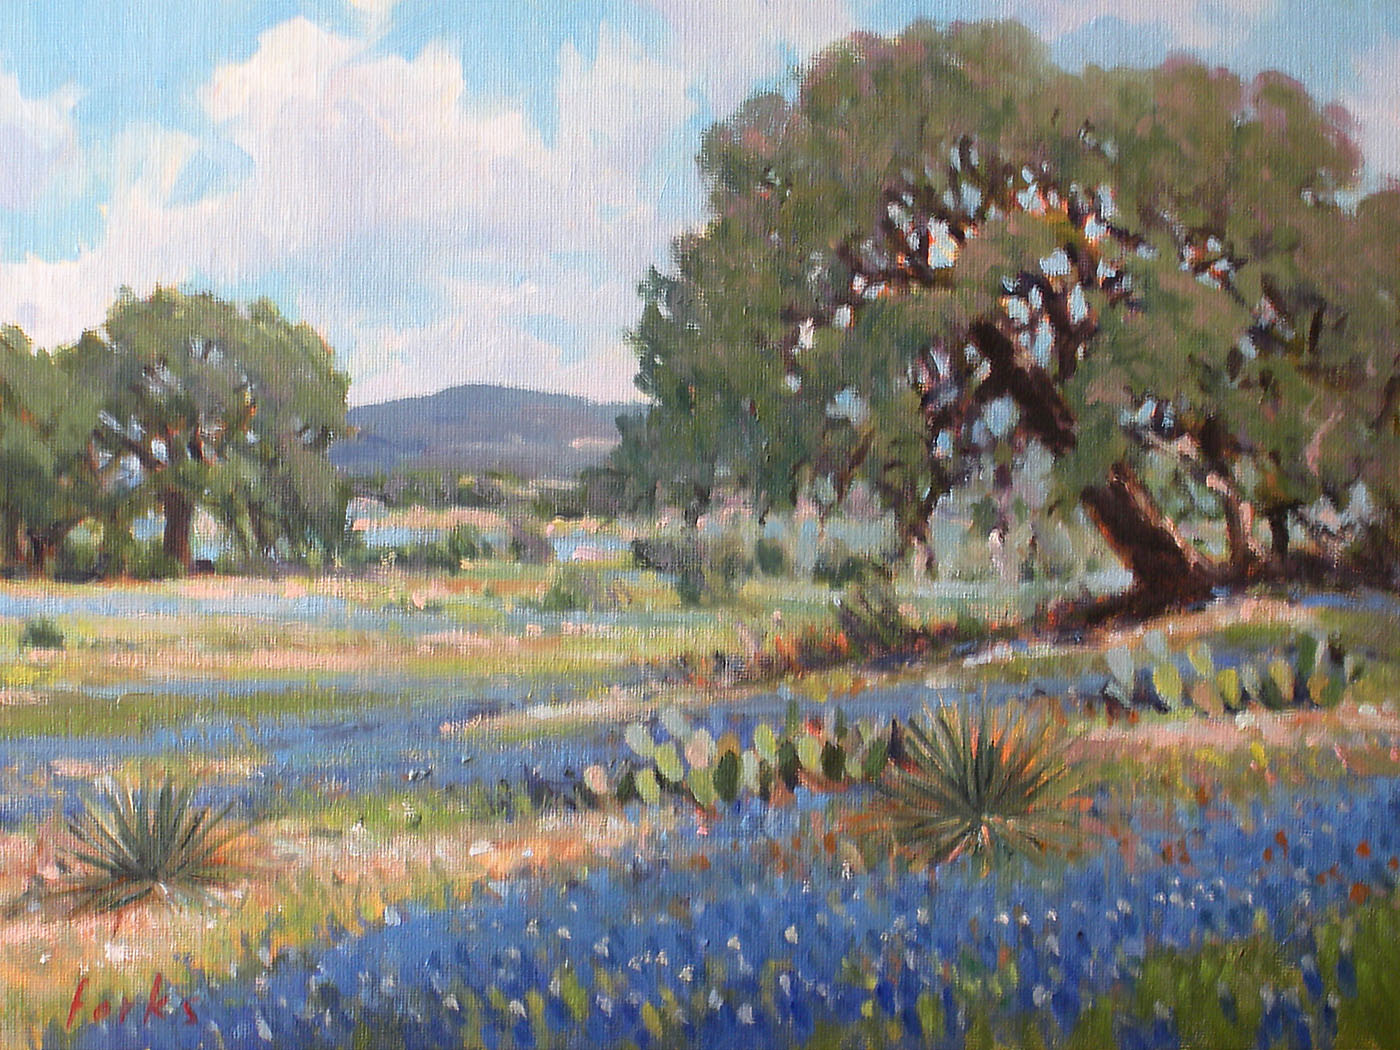 David Forks - Texas Landscape Painter: February 2011